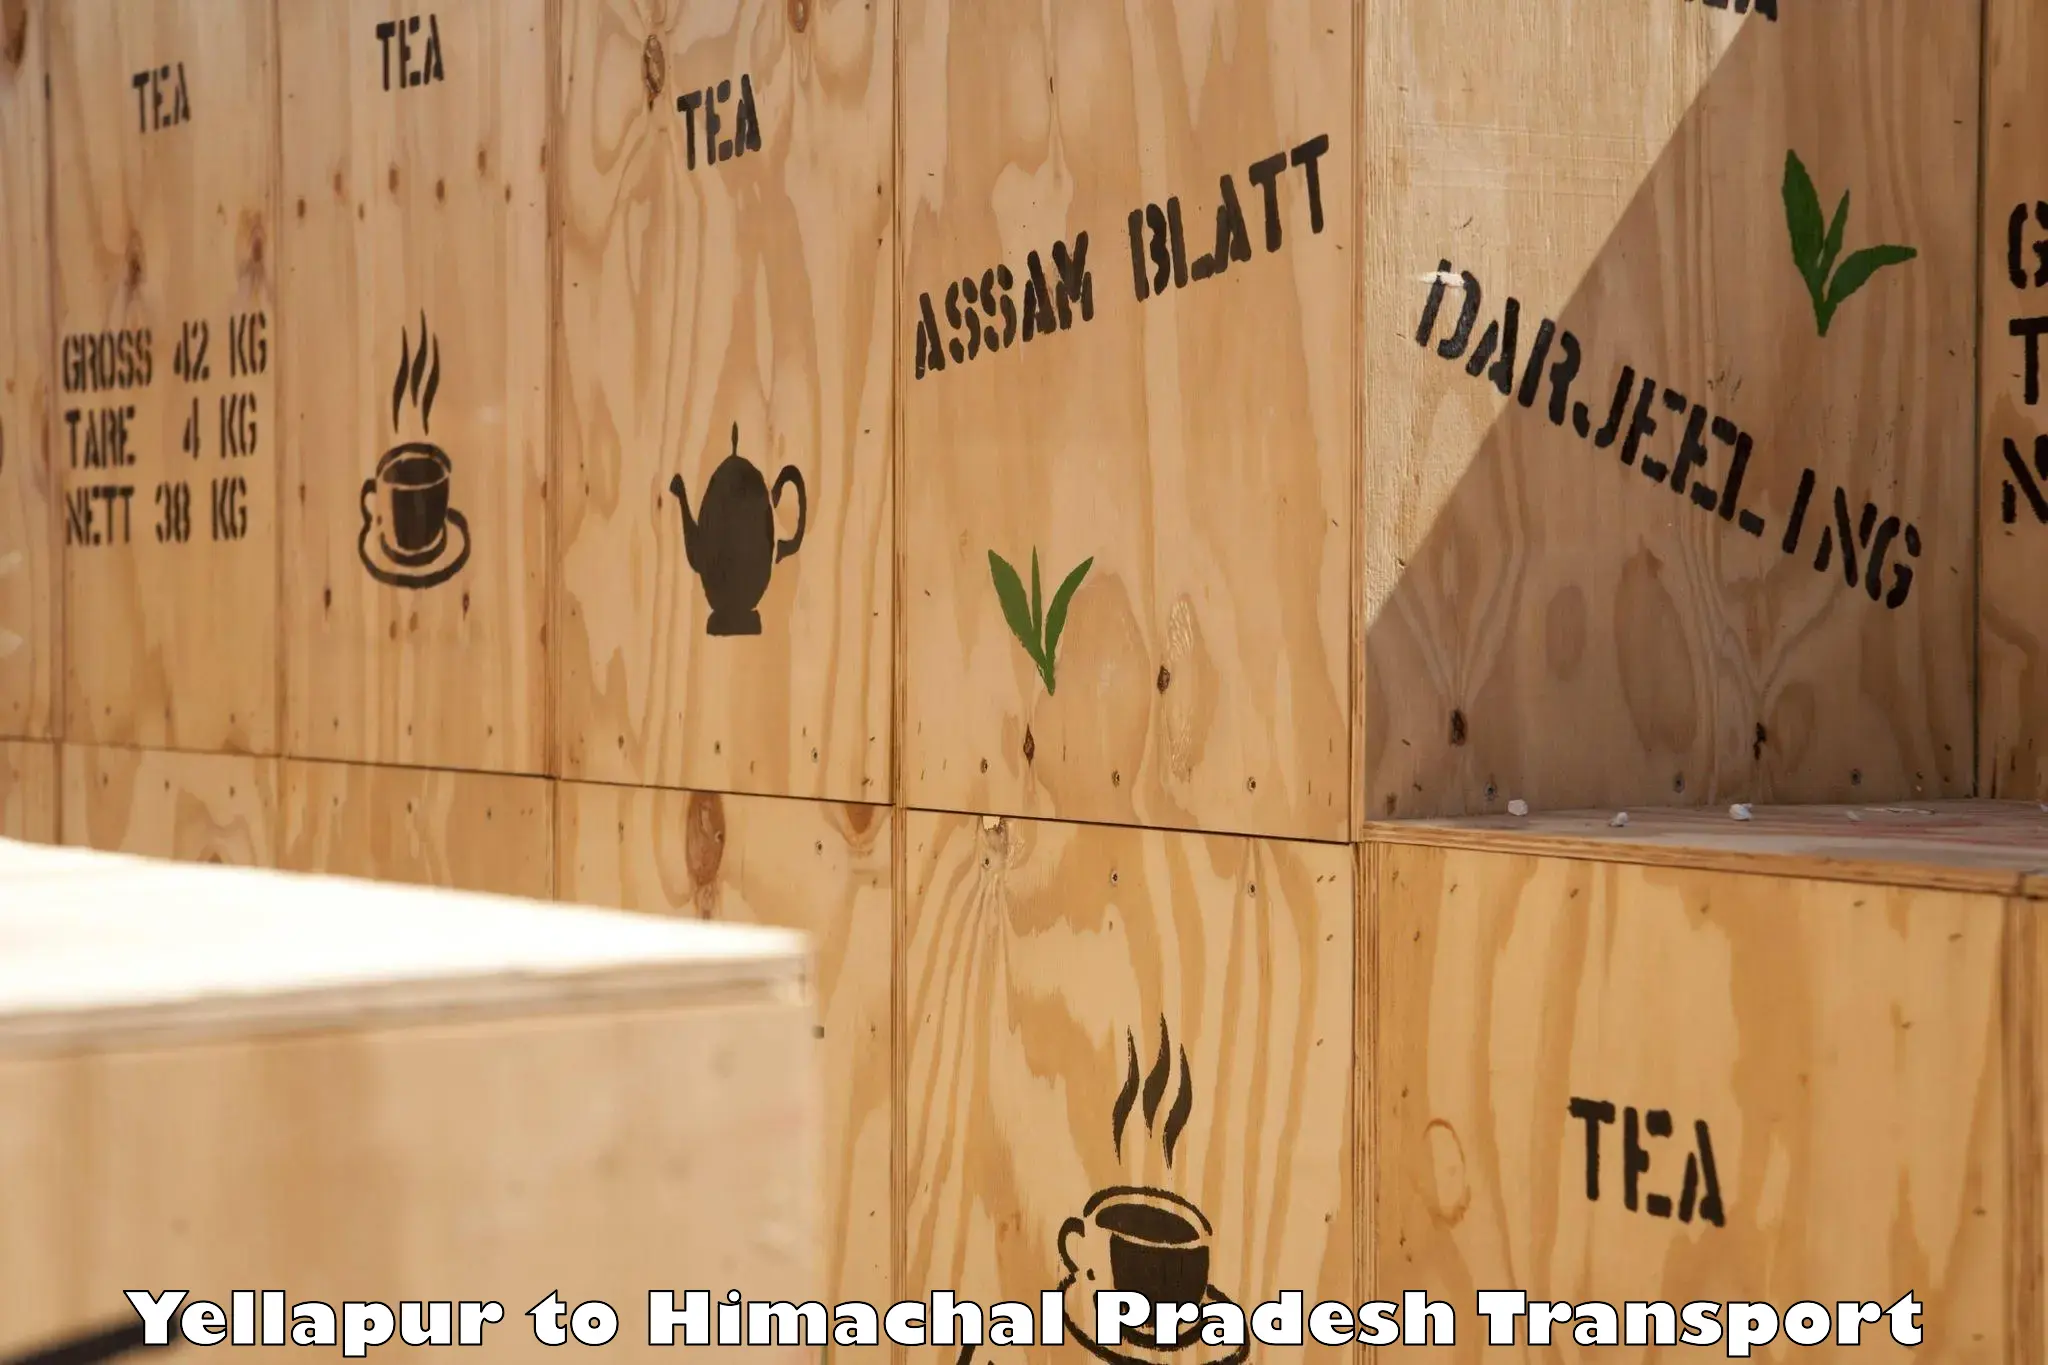 Furniture transport service Yellapur to Himachal Pradesh